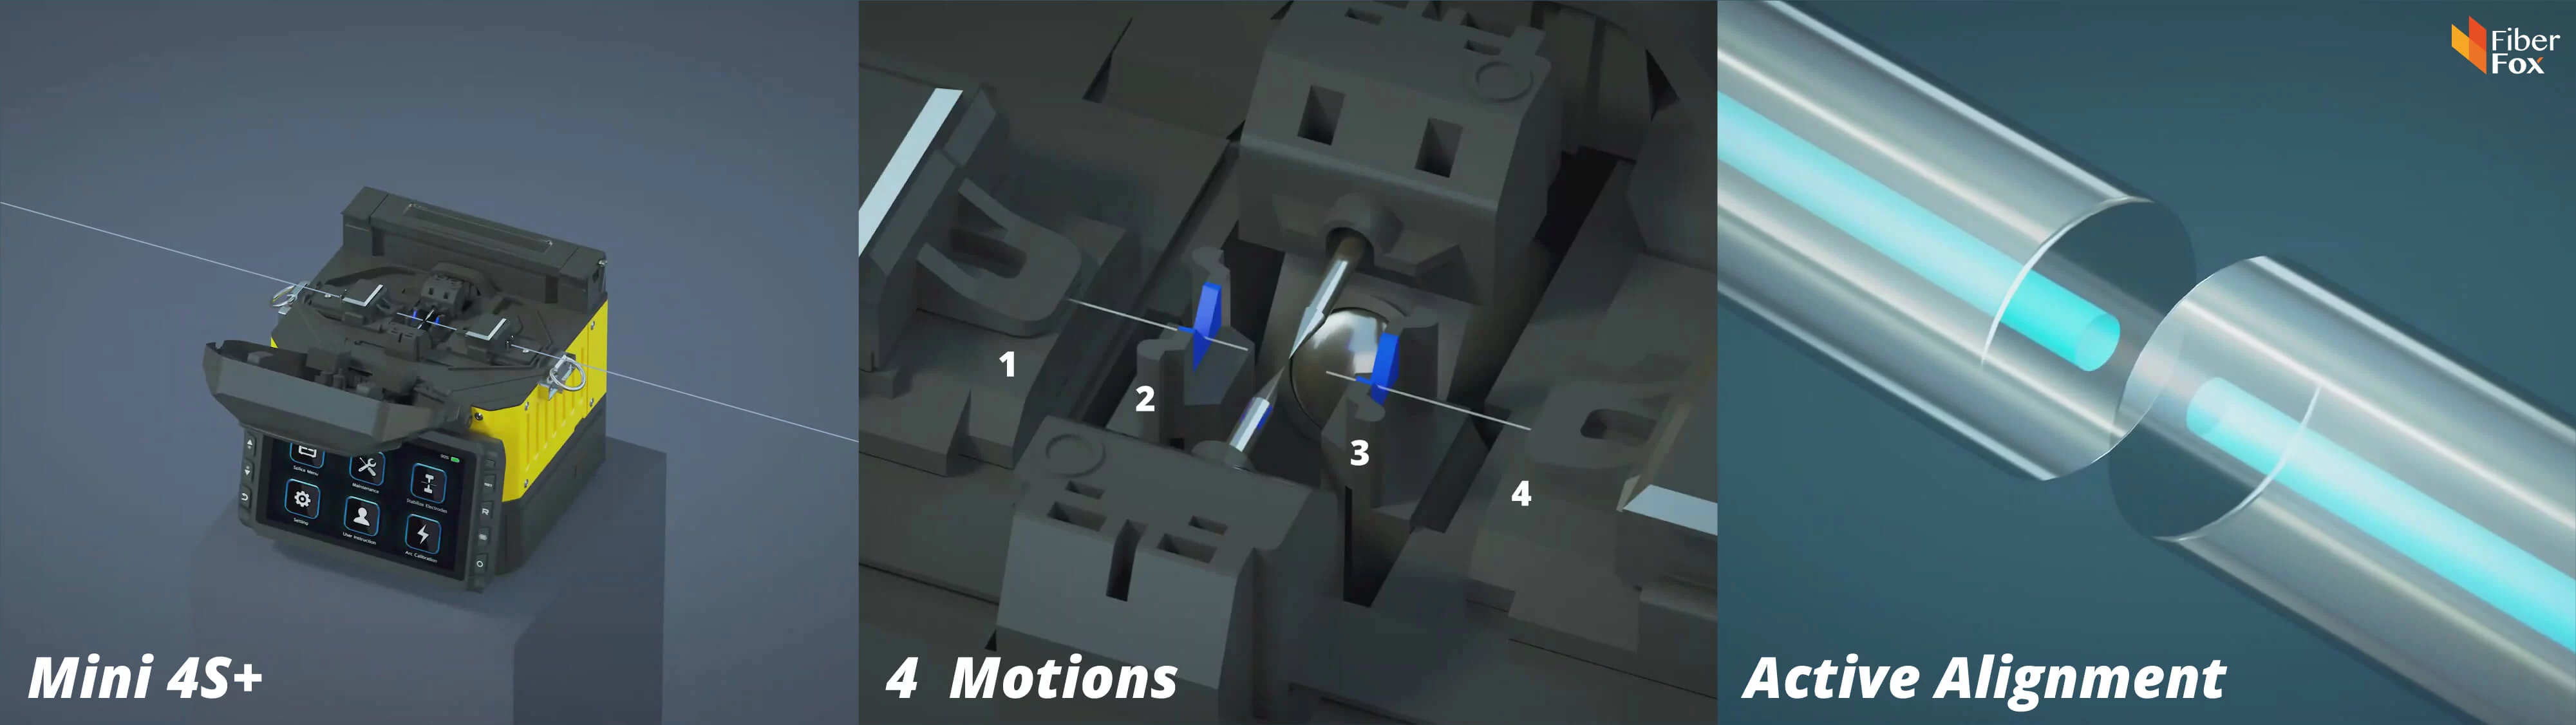 FiberFox Fusion Splicer Devices' Accuracy - Mini 4S+ 4 Motors Motion and Active Alignment